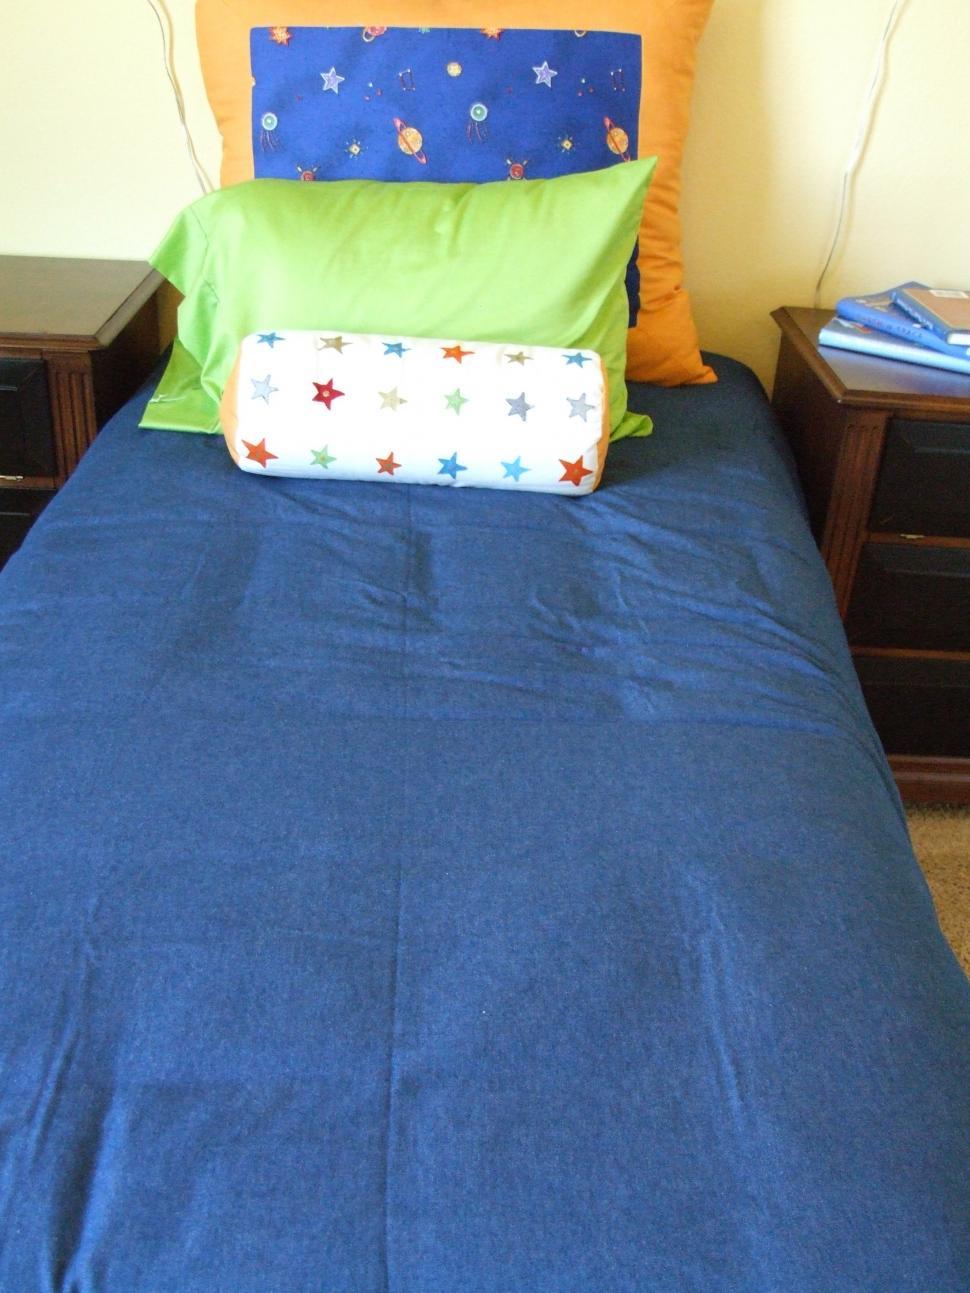 Free Image of Blue Bedroom 